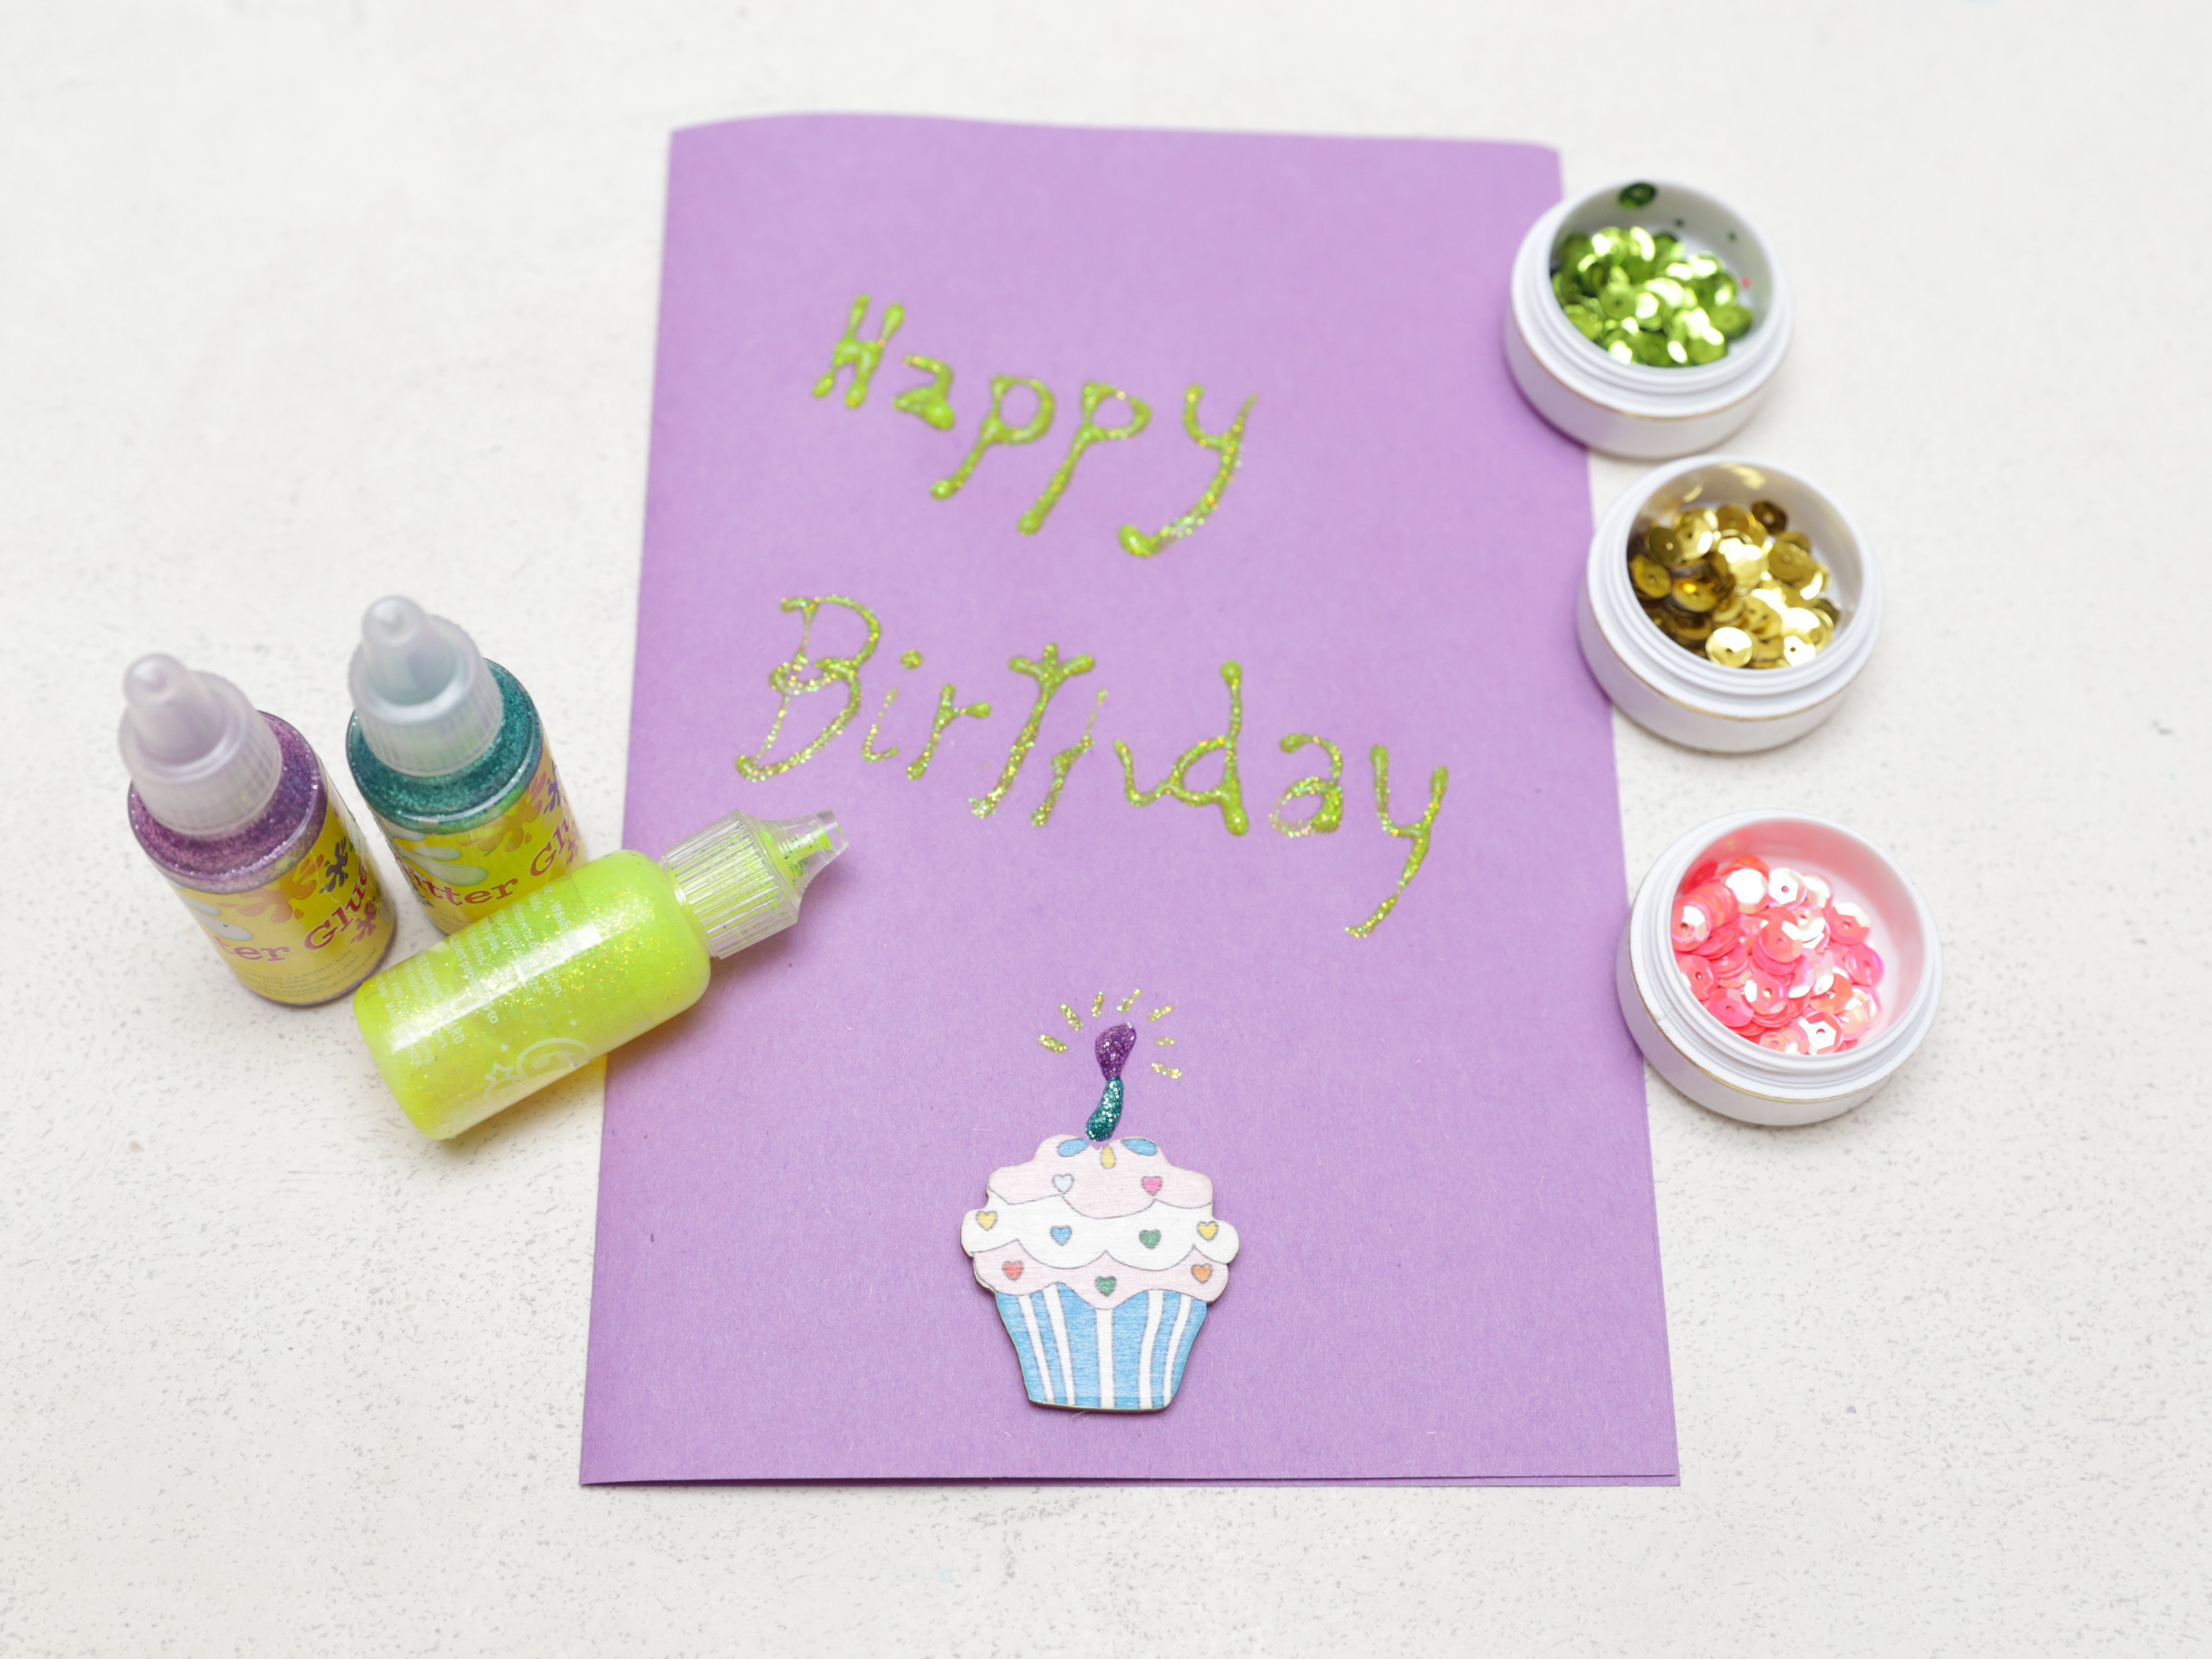 Make A Birthday Card Online
 How to Make a Simple Handmade Birthday Card 15 Steps